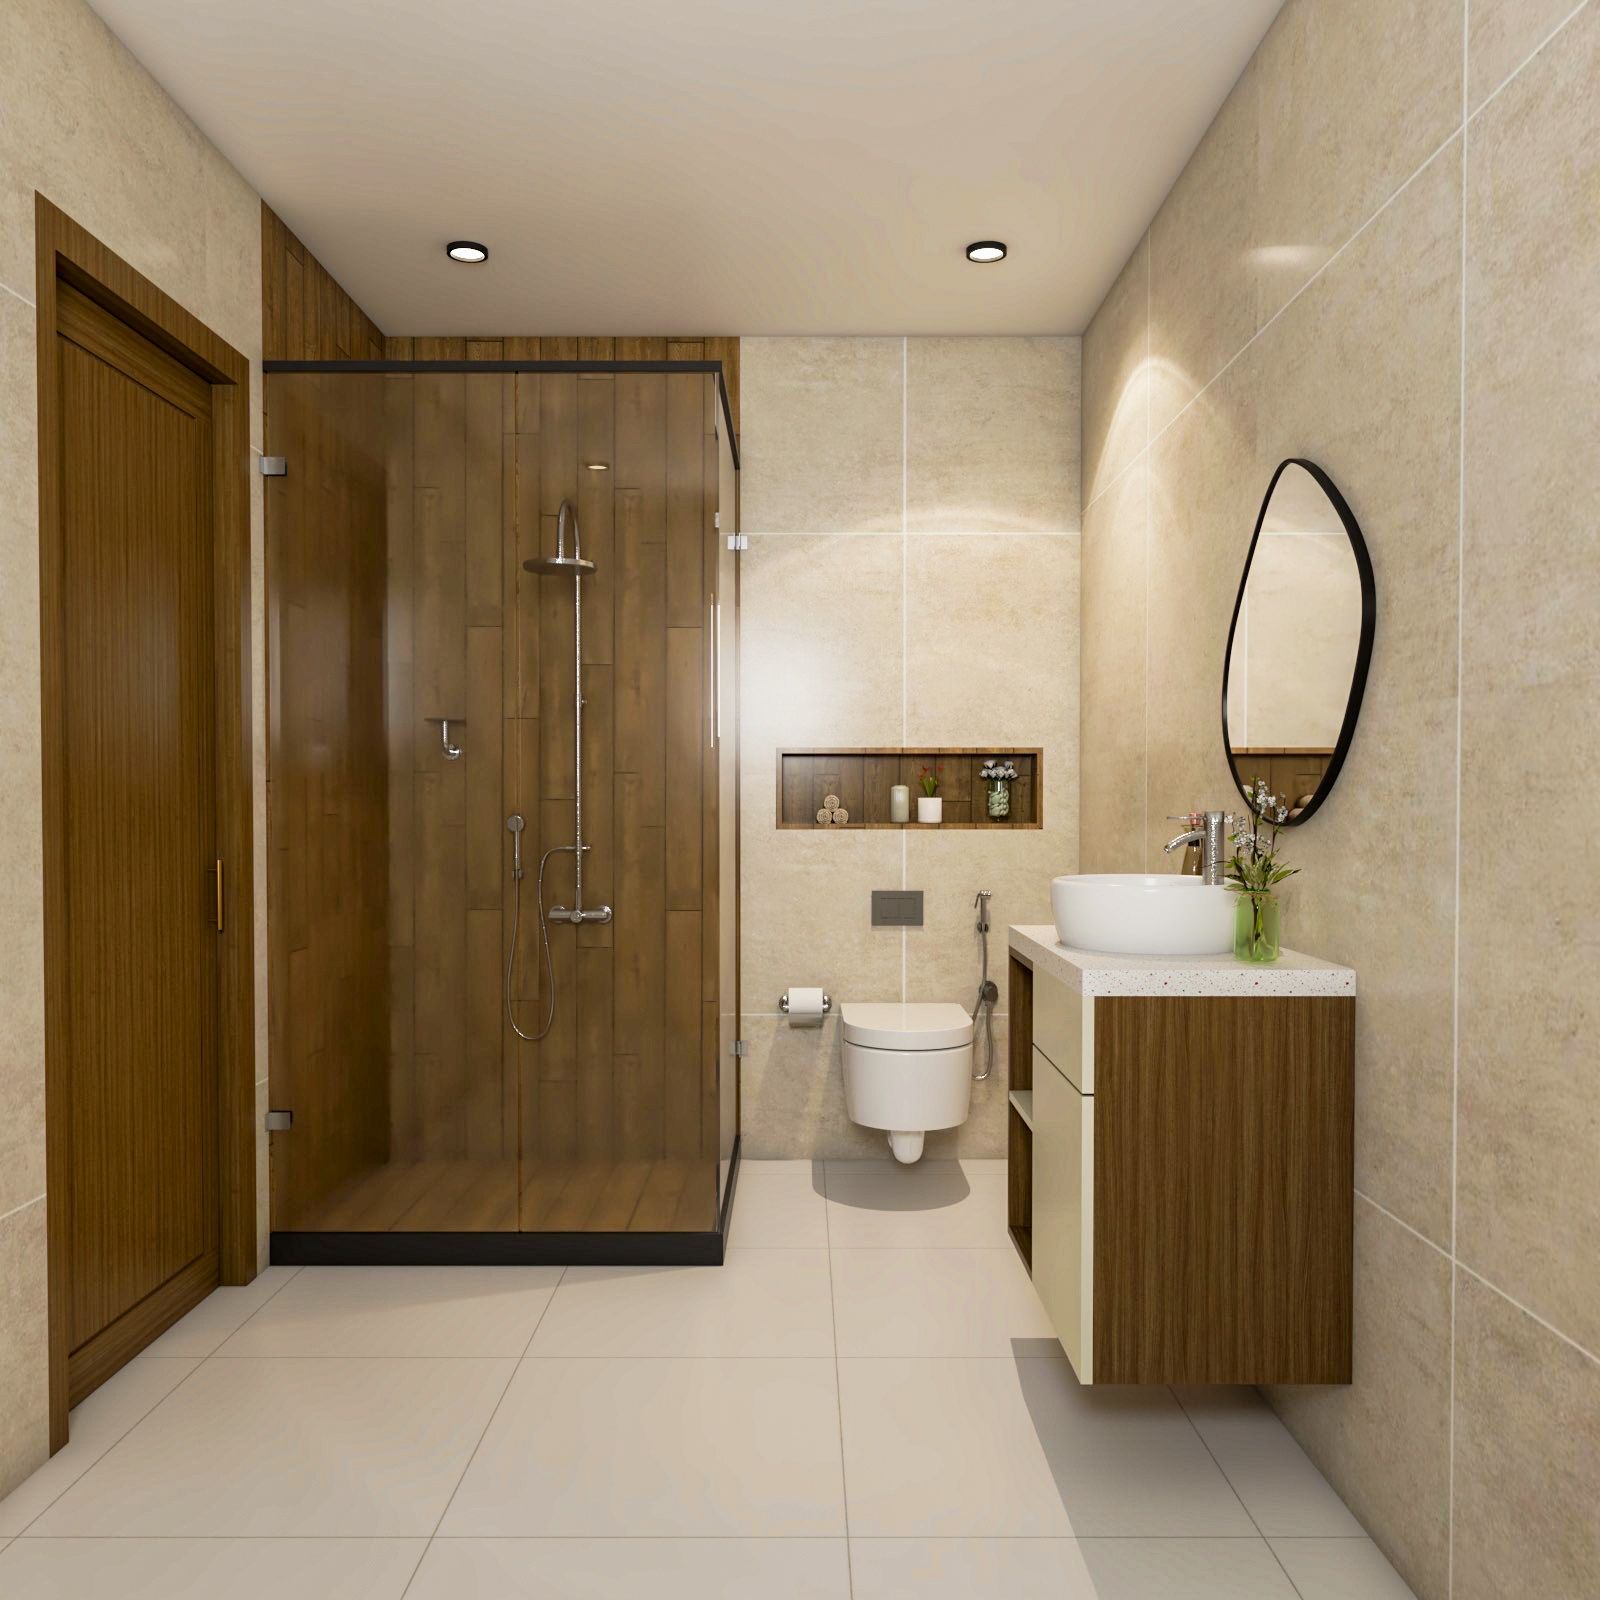 Contemporary Beige Themed Bathroom Design With Round Mirror